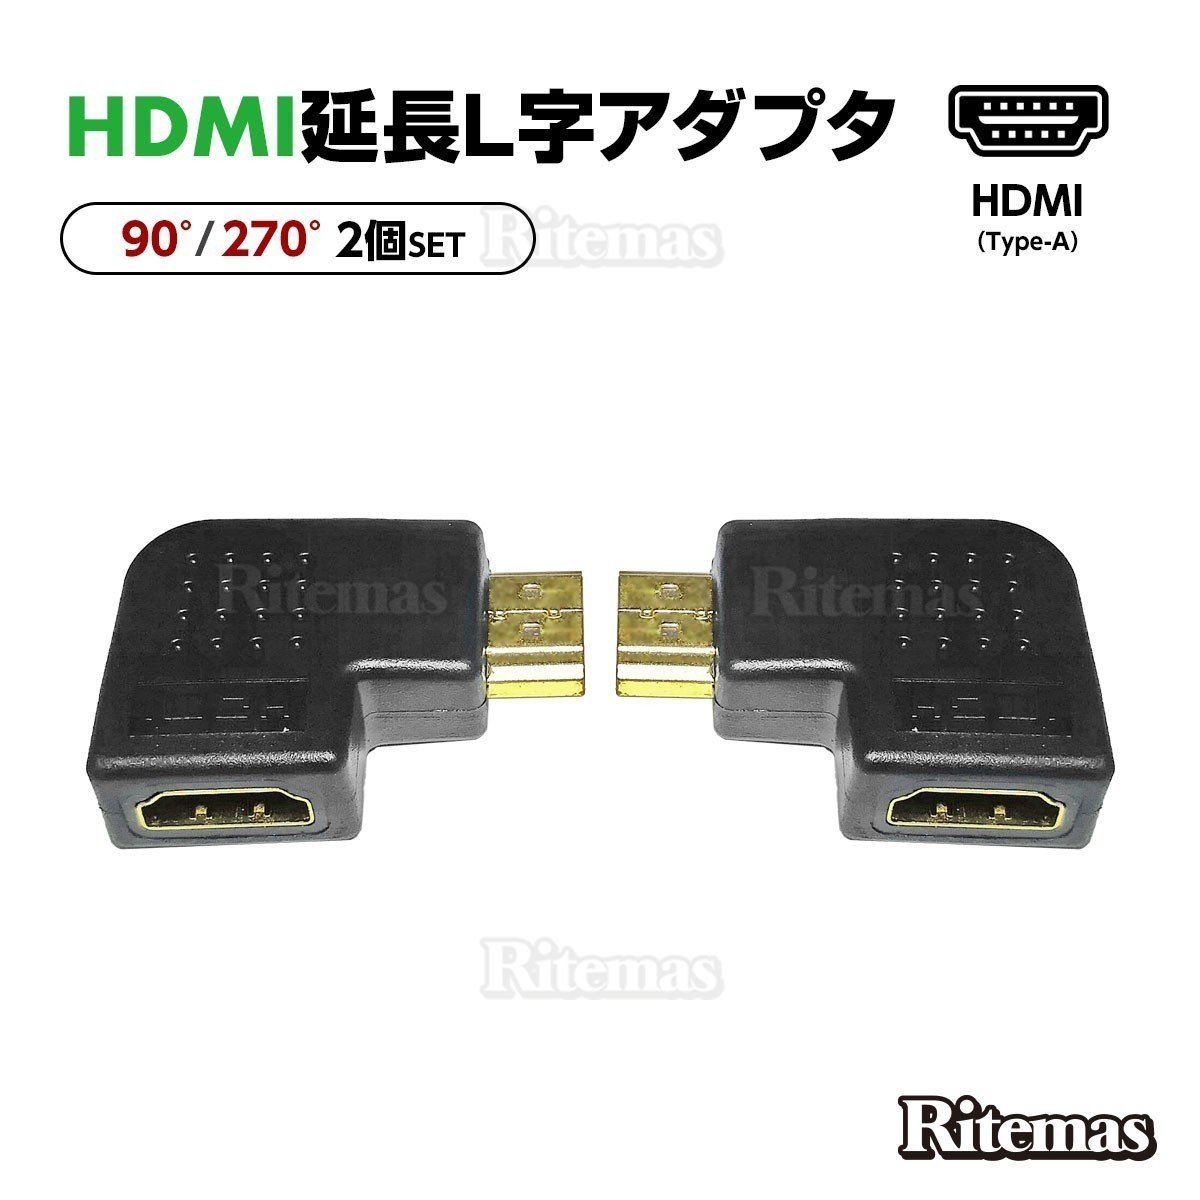 HDMI L字コネクタ L字アダプター L字変換器 変換アダプタ オス-メス L型 省スペース 狭い 曲げる 角度 90° 270° 左右変換 HDMI変換 横L型_CVS-011